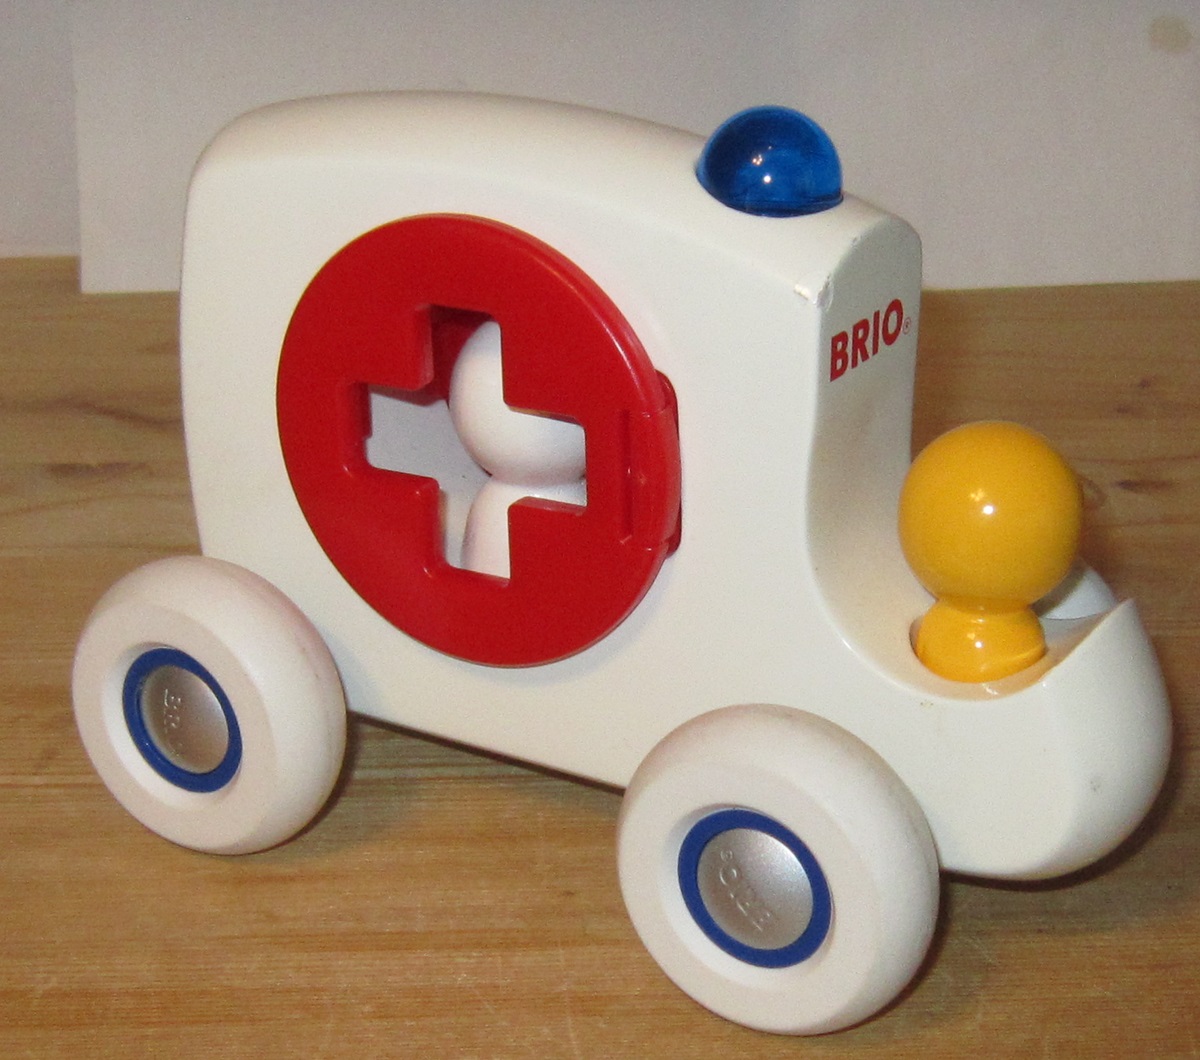 0075 Brio ambulance